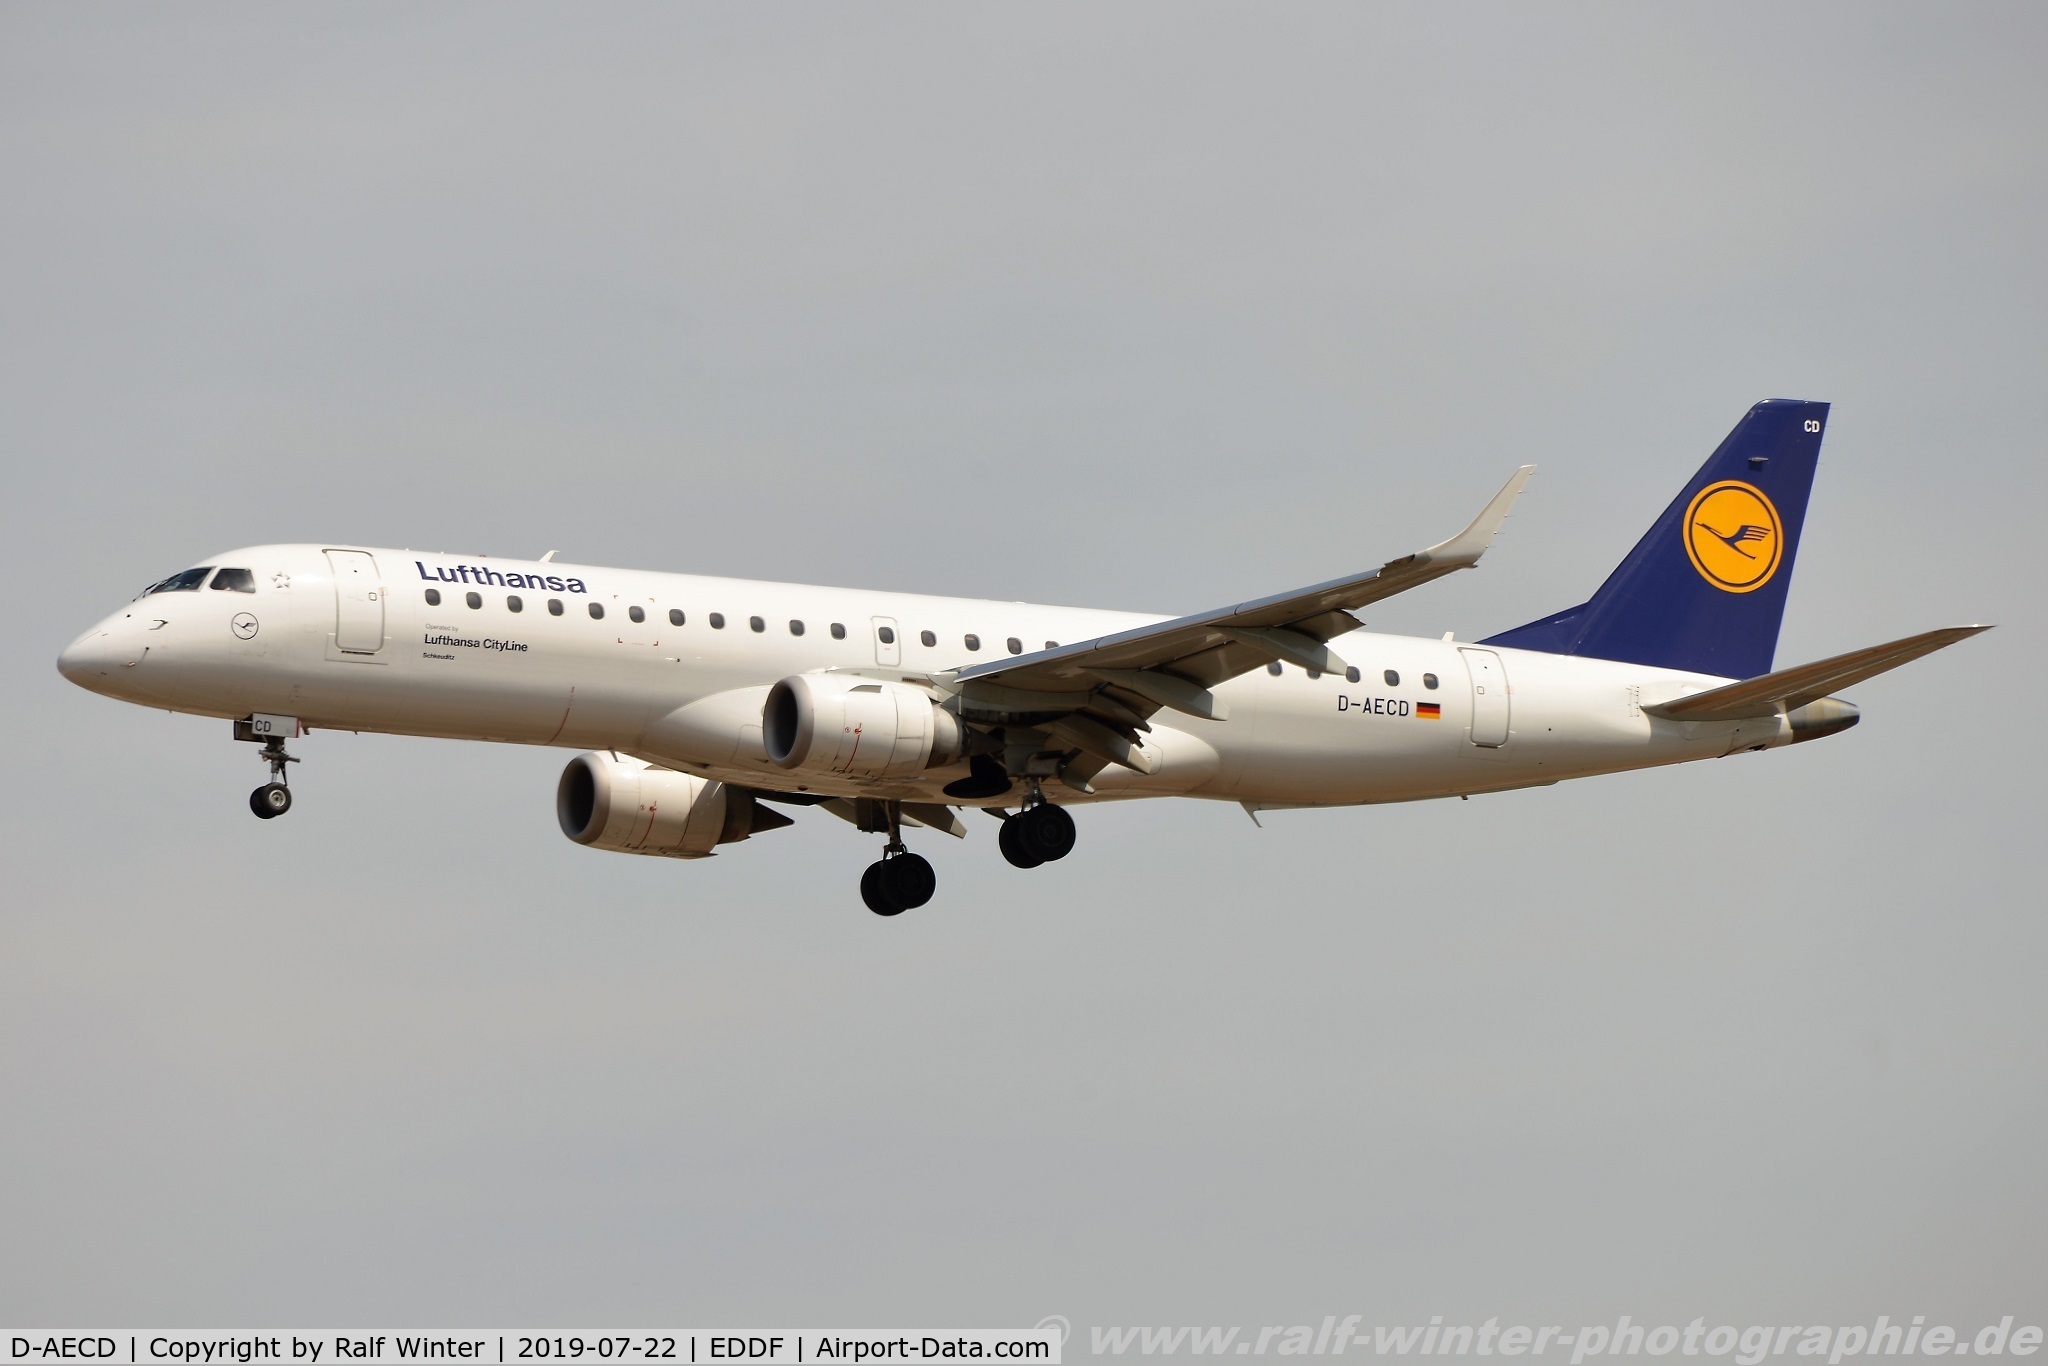 D-AECD, 2010 Embraer 190LR (ERJ-190-100LR) C/N 19000337, Embraer ERJ-190LR - CL CLH Lufthansa Cityline 'Schkeuditz' - 19000337 - D-AECD - 22.07.2019 - FRA